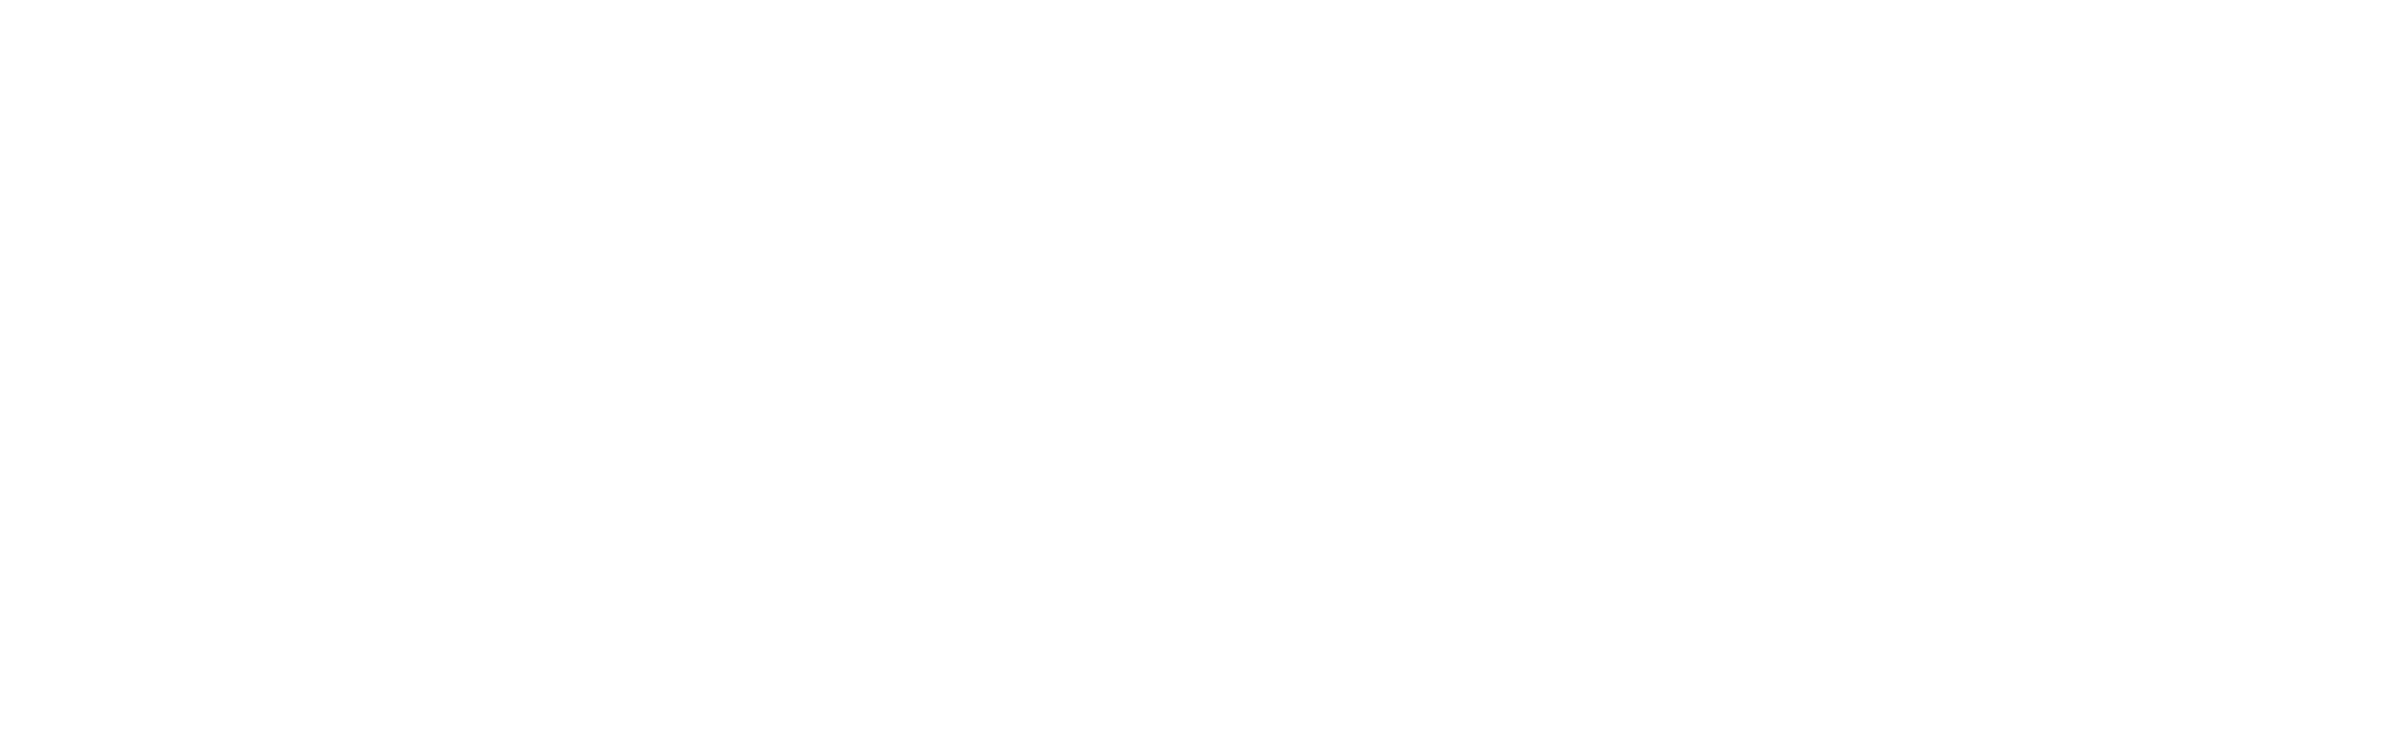 malarkey roofing products white logo